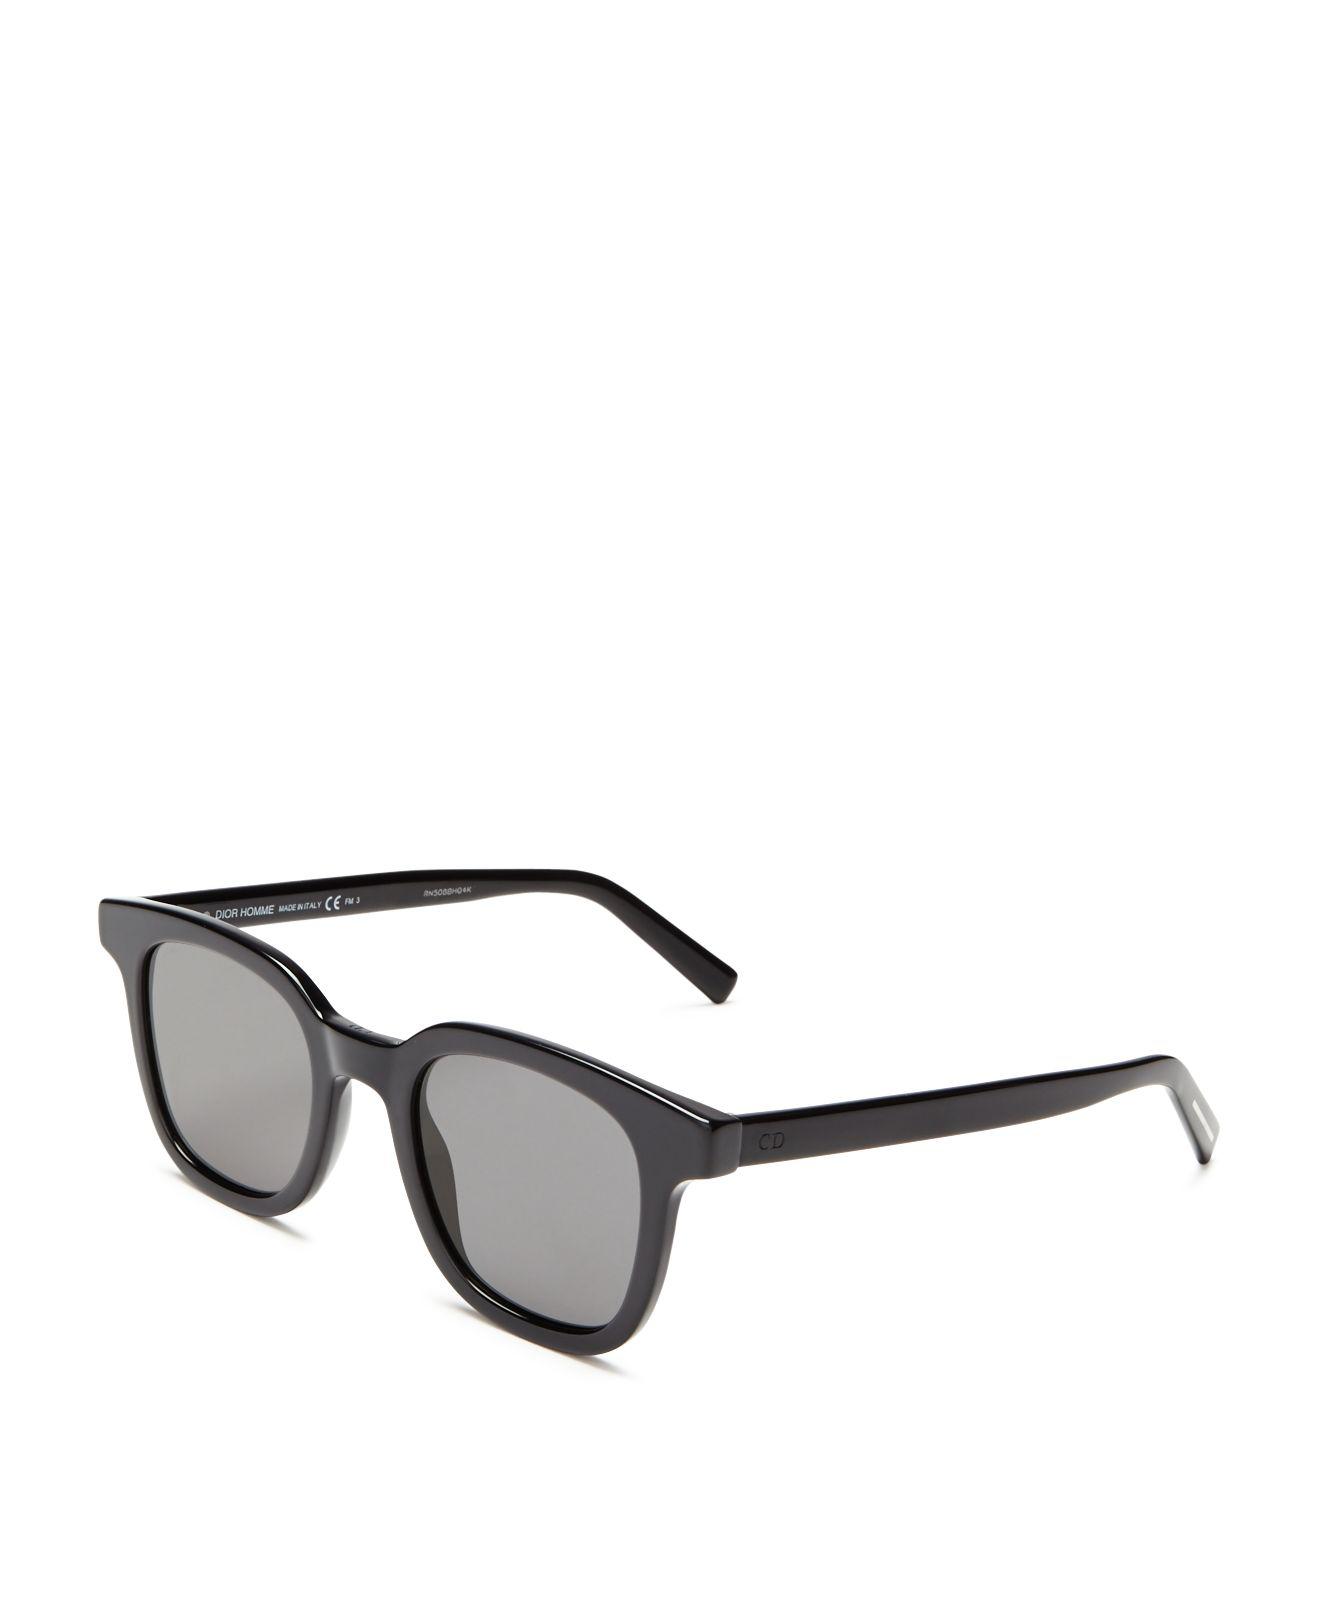 Dior Homme Black Tie 254s Sunglasses